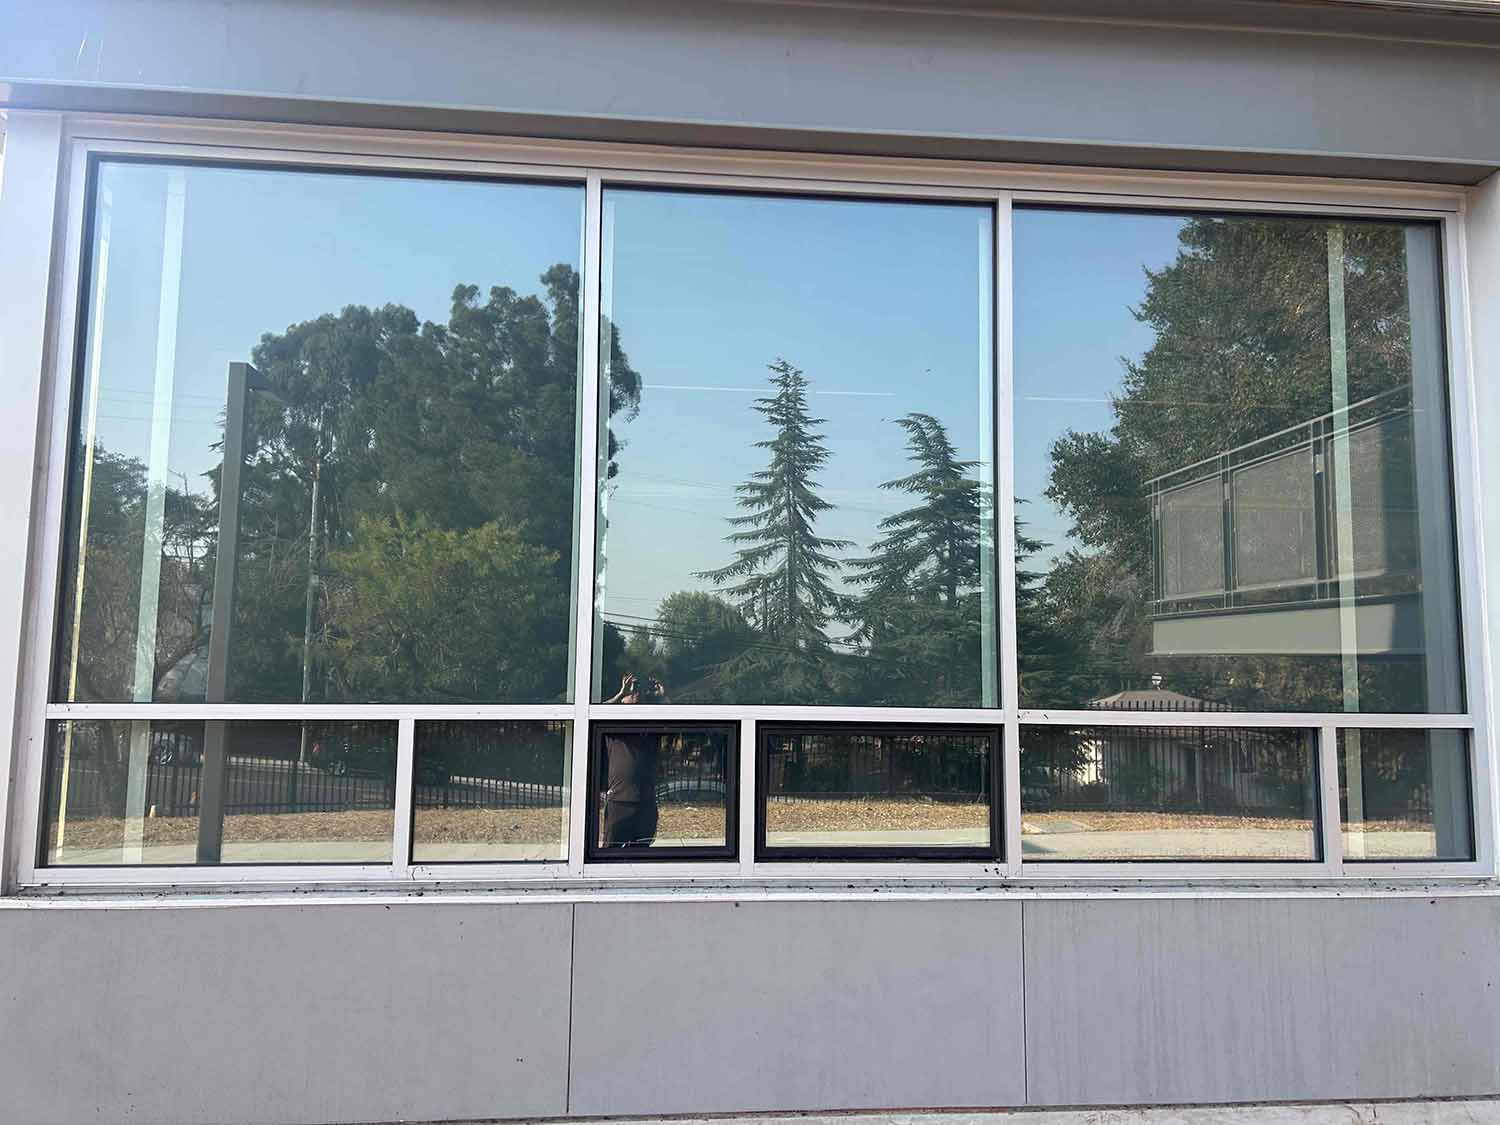 ClimatePro installed 3M Anti-Graffiti window film on the windows of this Hayward, CA school. Get a free estimate today.